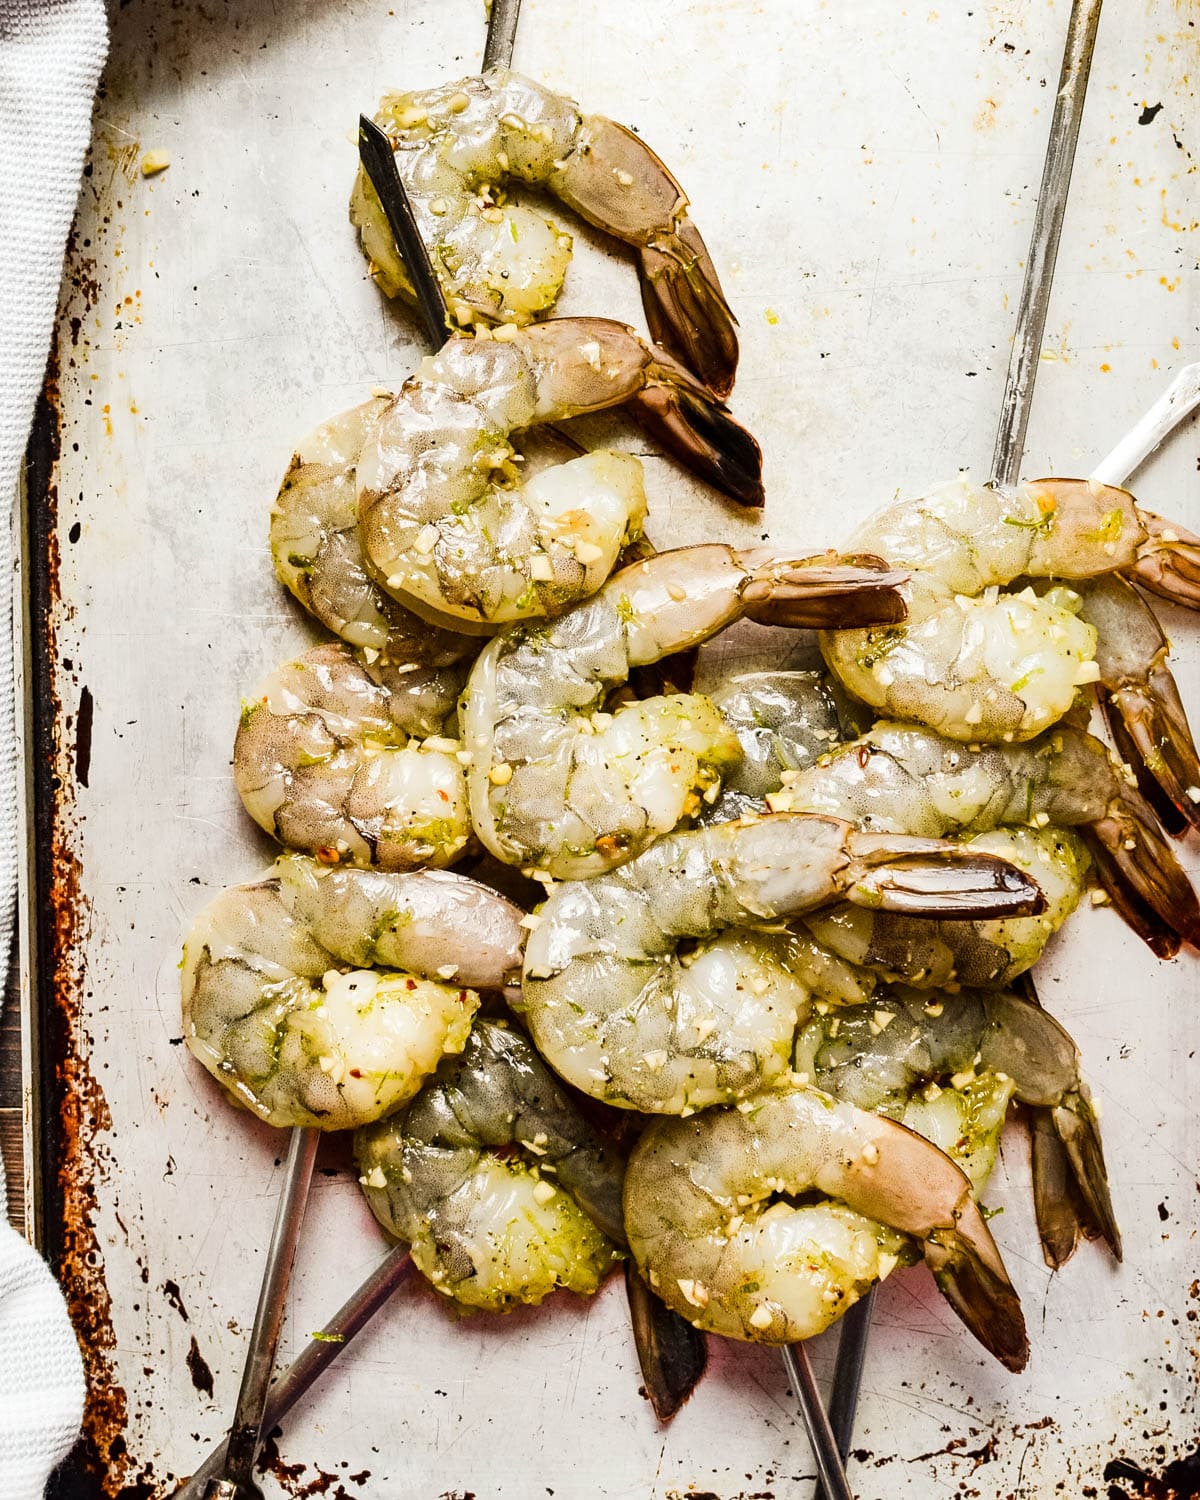 A platter of marinated shrimp on skewers.